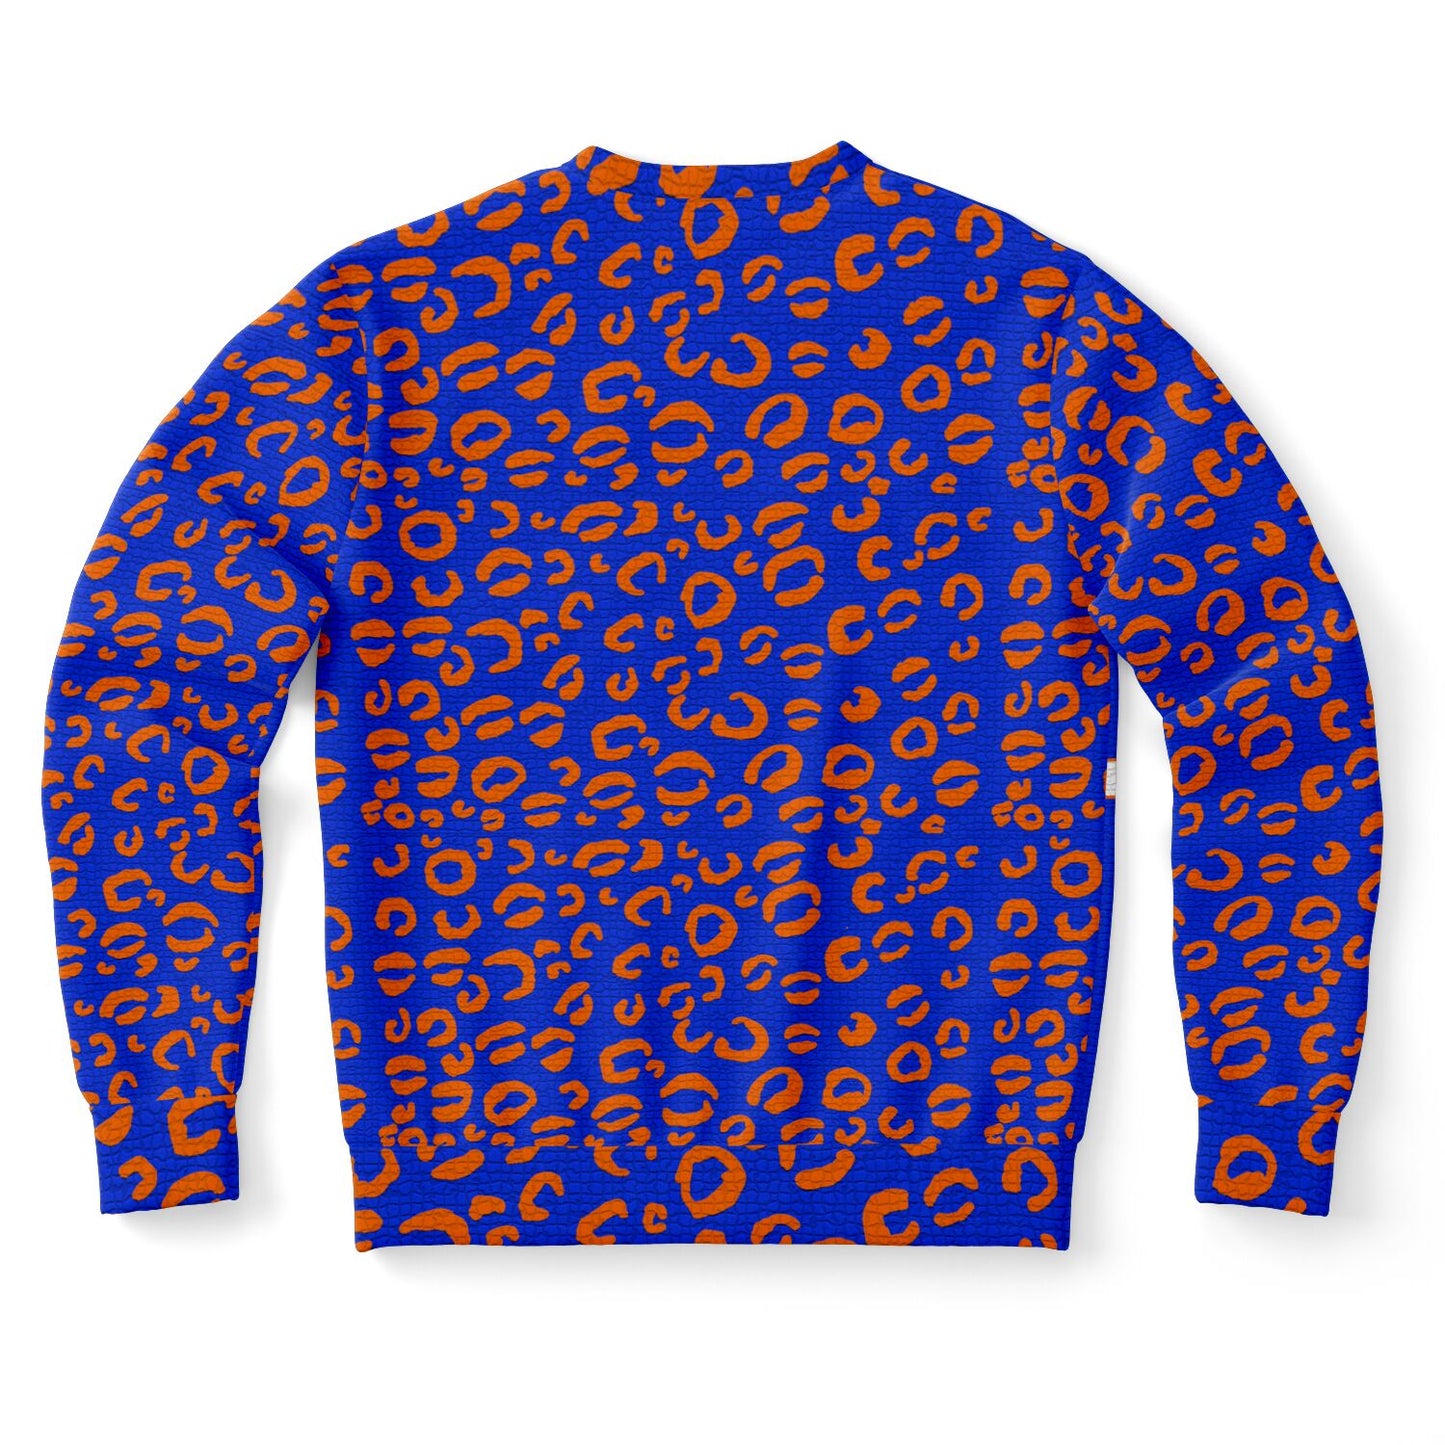 New York Knicks Colour Inspired Mosaic Leopard Print Sweatshirt - HipHatter